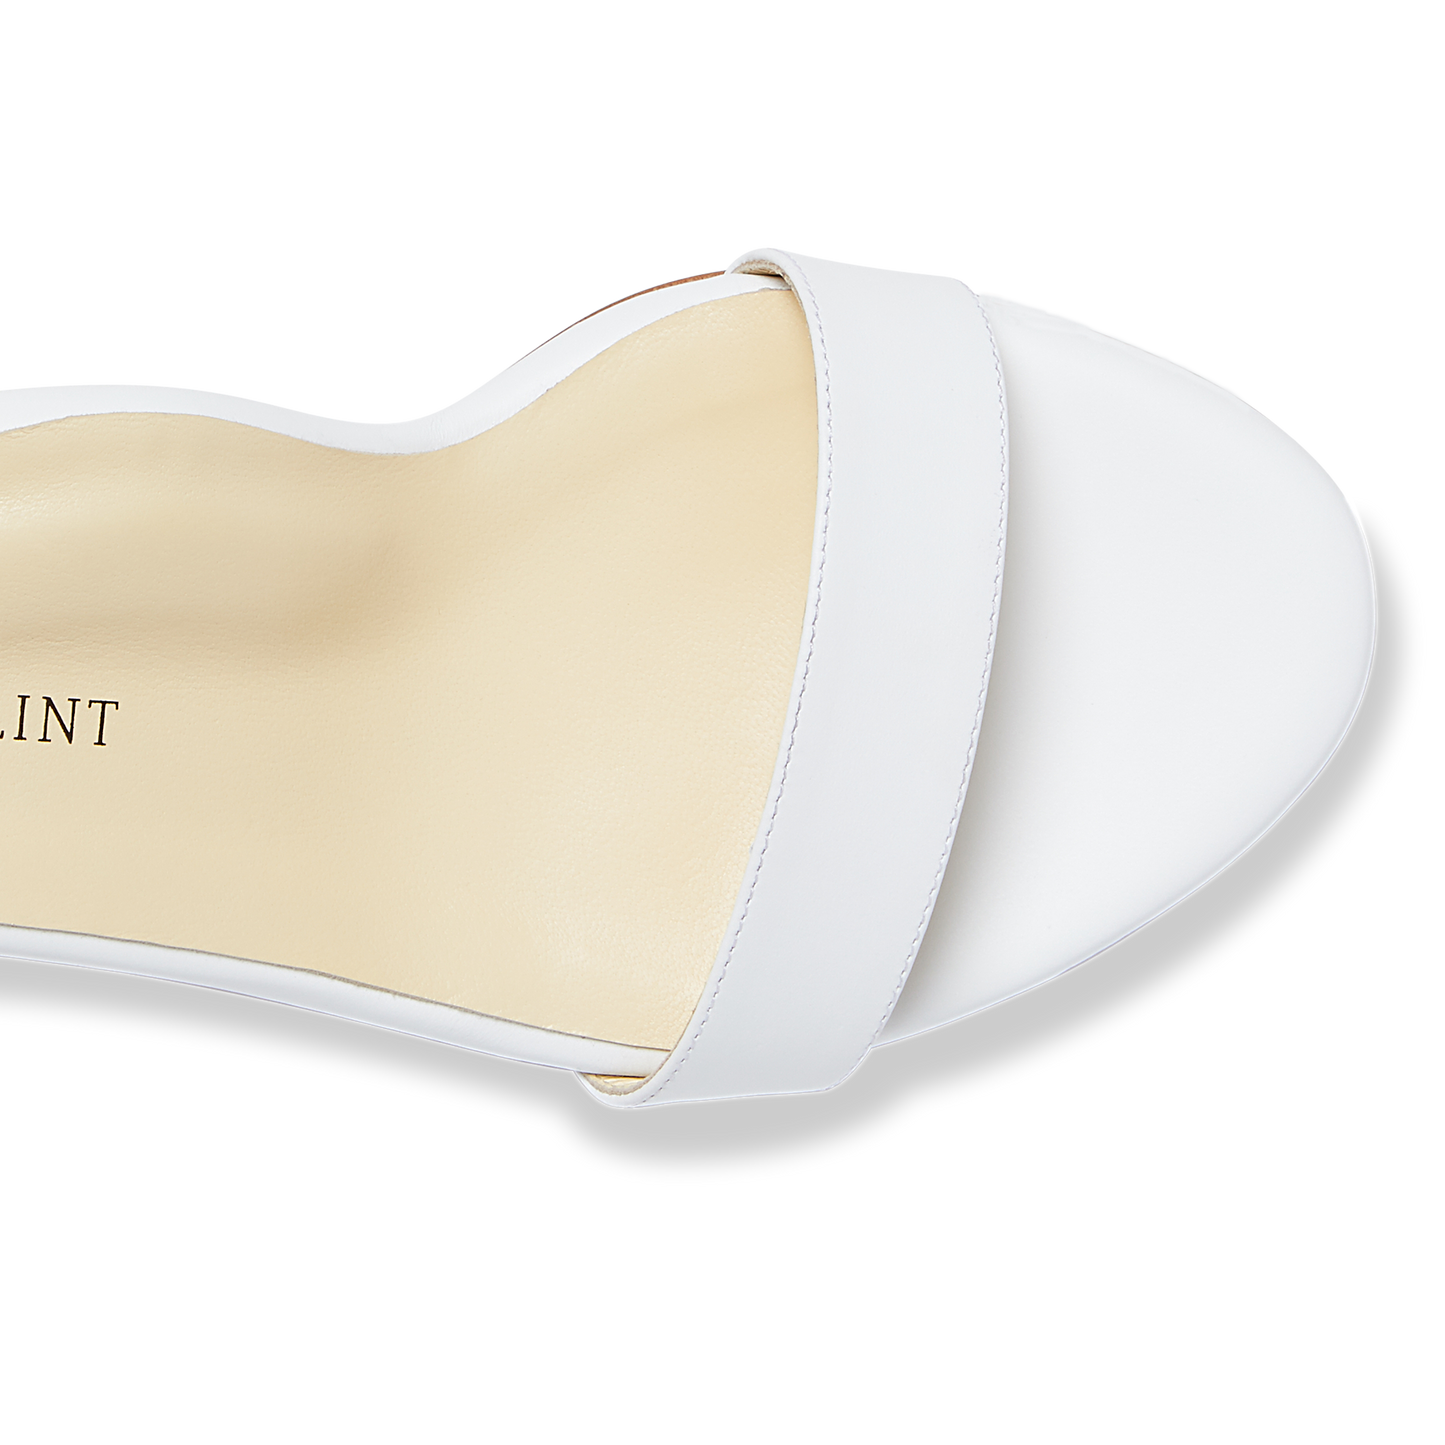 30mm Italian Made Perfect Block Sandal in White Calf